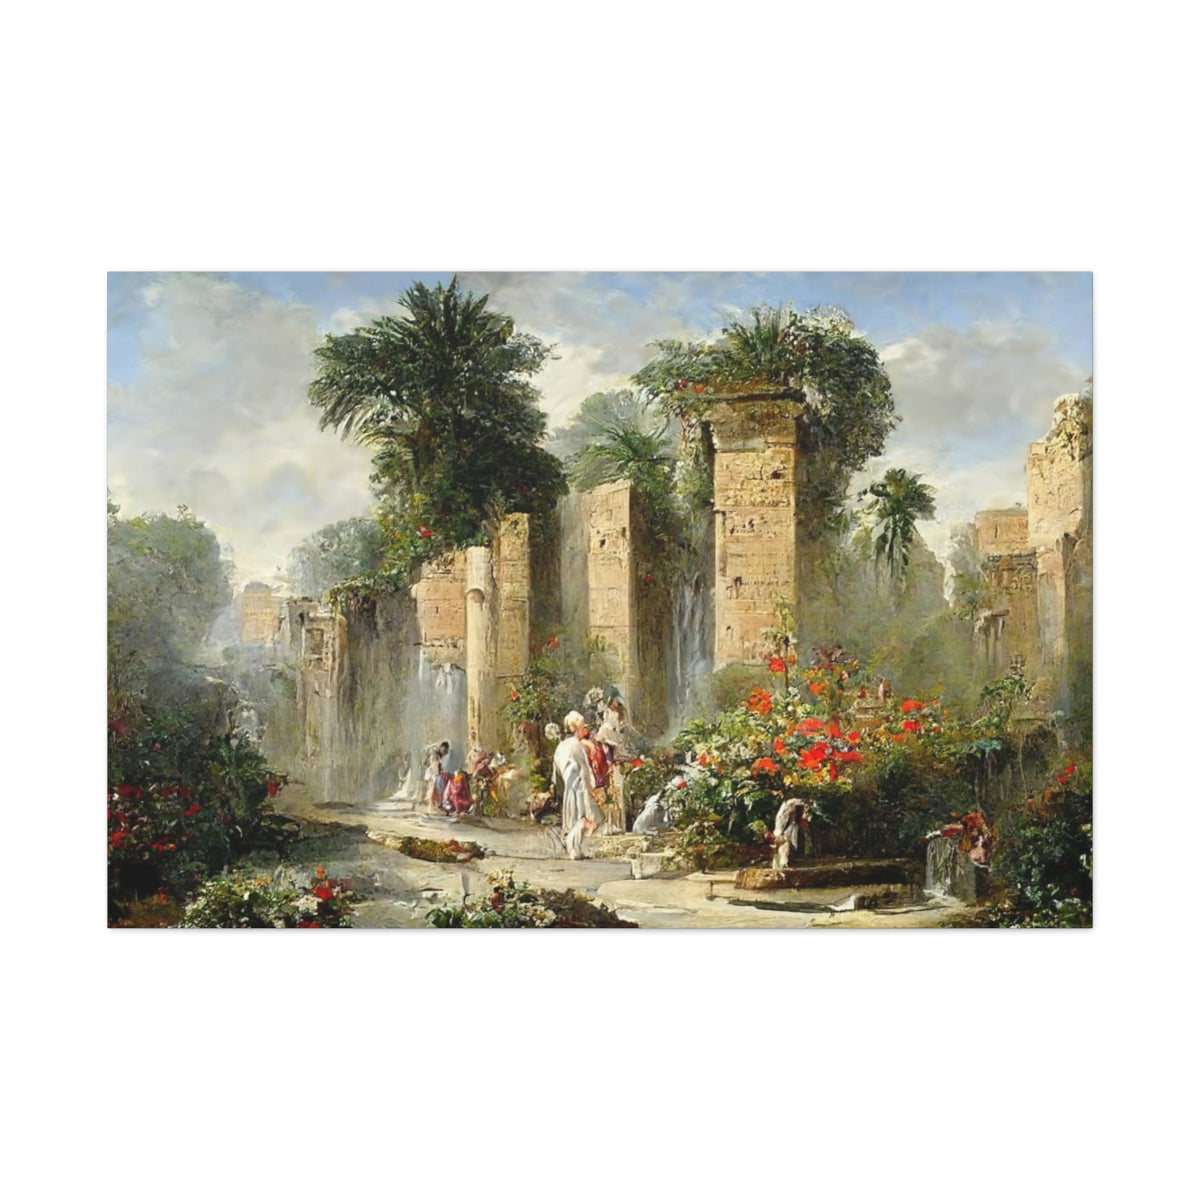 Hanging Gardens of Babylon - Canvas Gallery Wraps